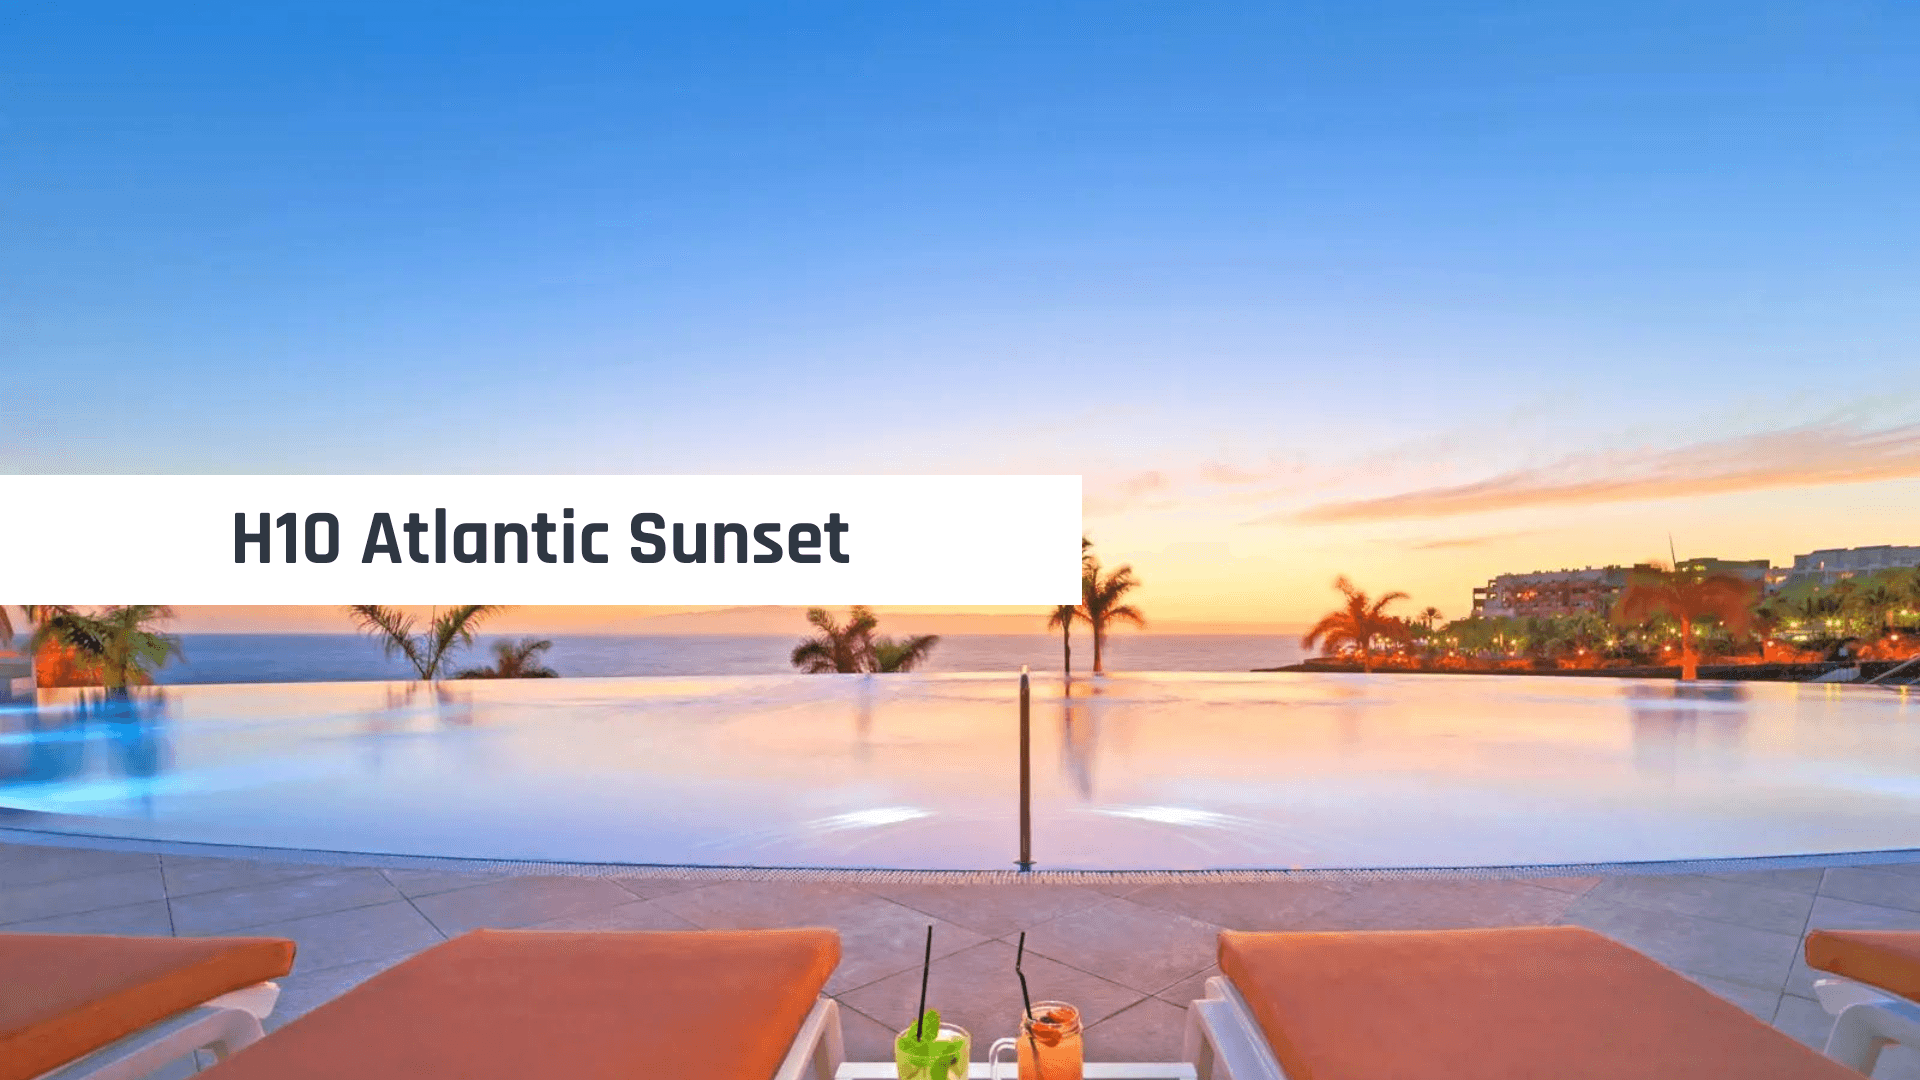 H10 Atlantic Sunset